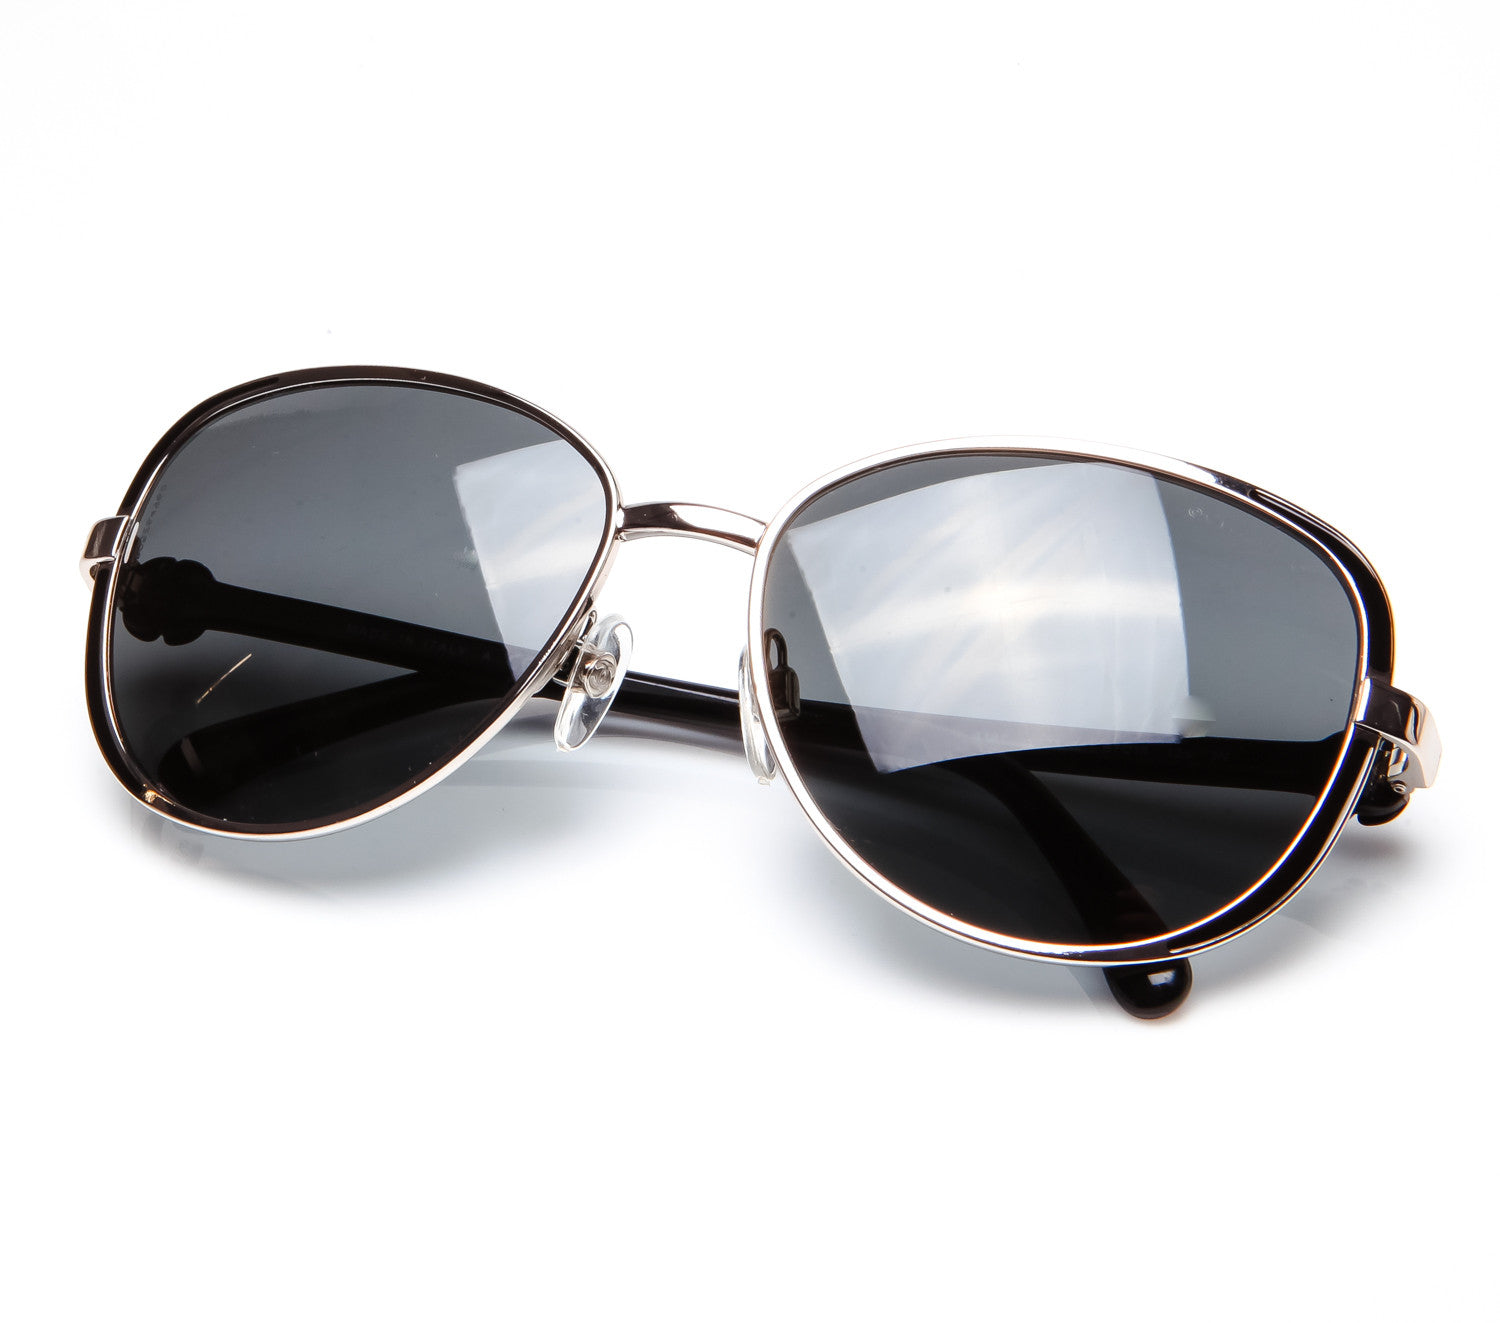 Ladies Chanel 3188 C.1208 Eyeglasses Sunglasses Frames 